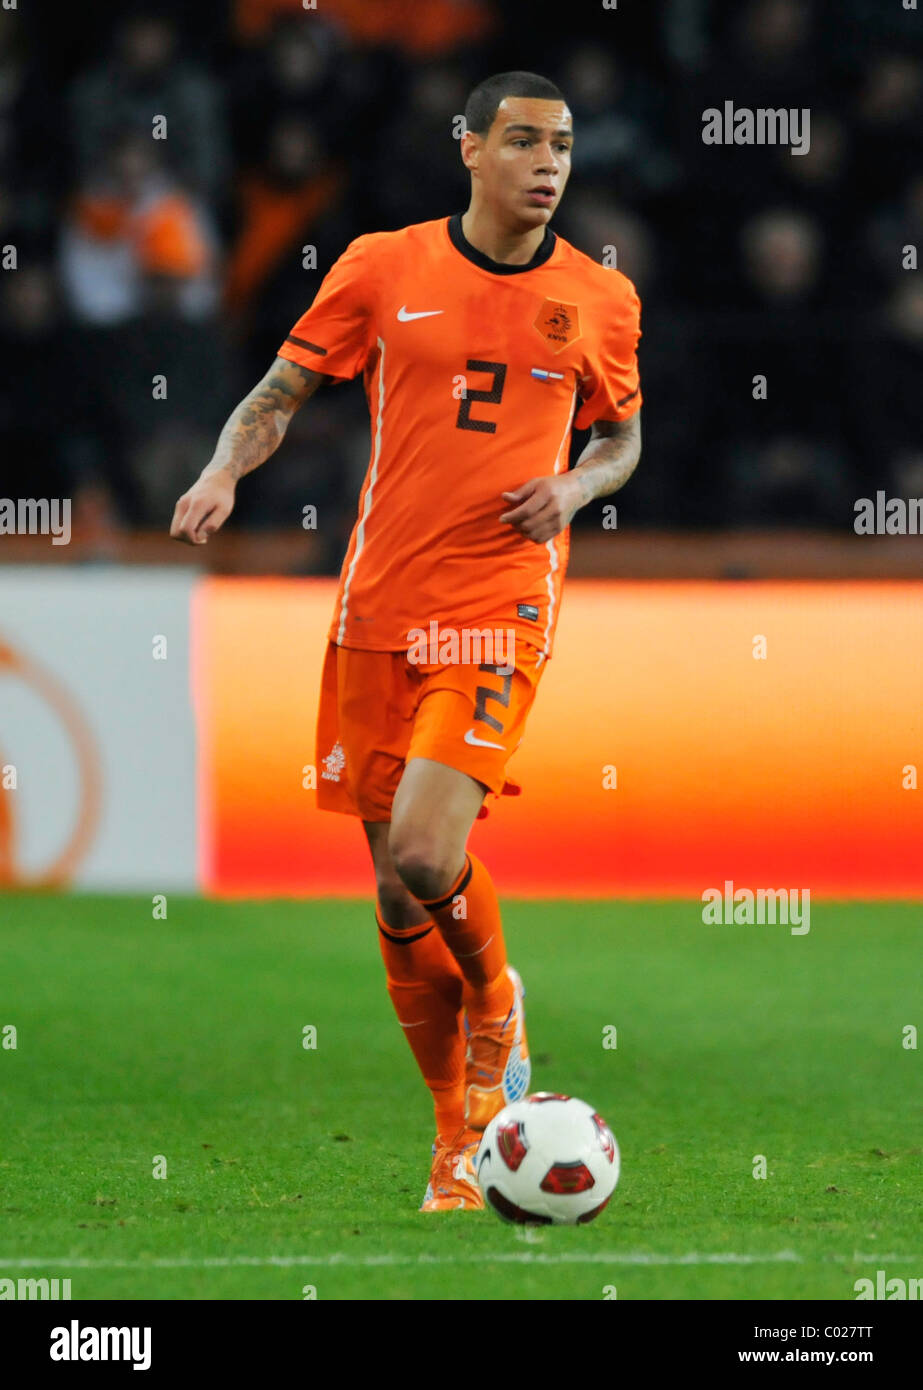 Toronto FC sign Dutch international Gregory van der Wiel